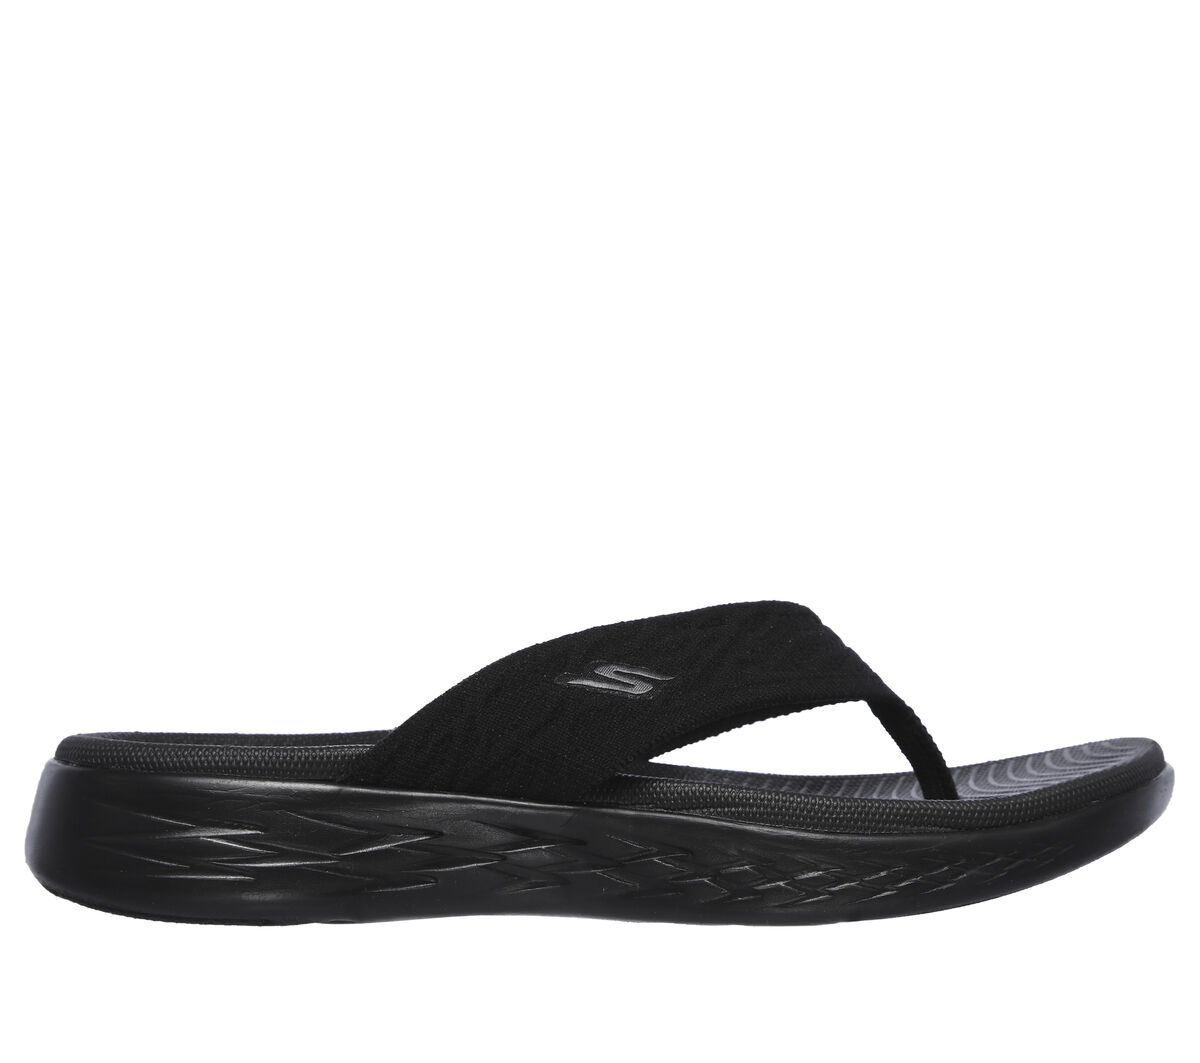 Skechers On-the-GO 600 Women's Flip Flop Athletic Yoga Sandals US Size 8  Black